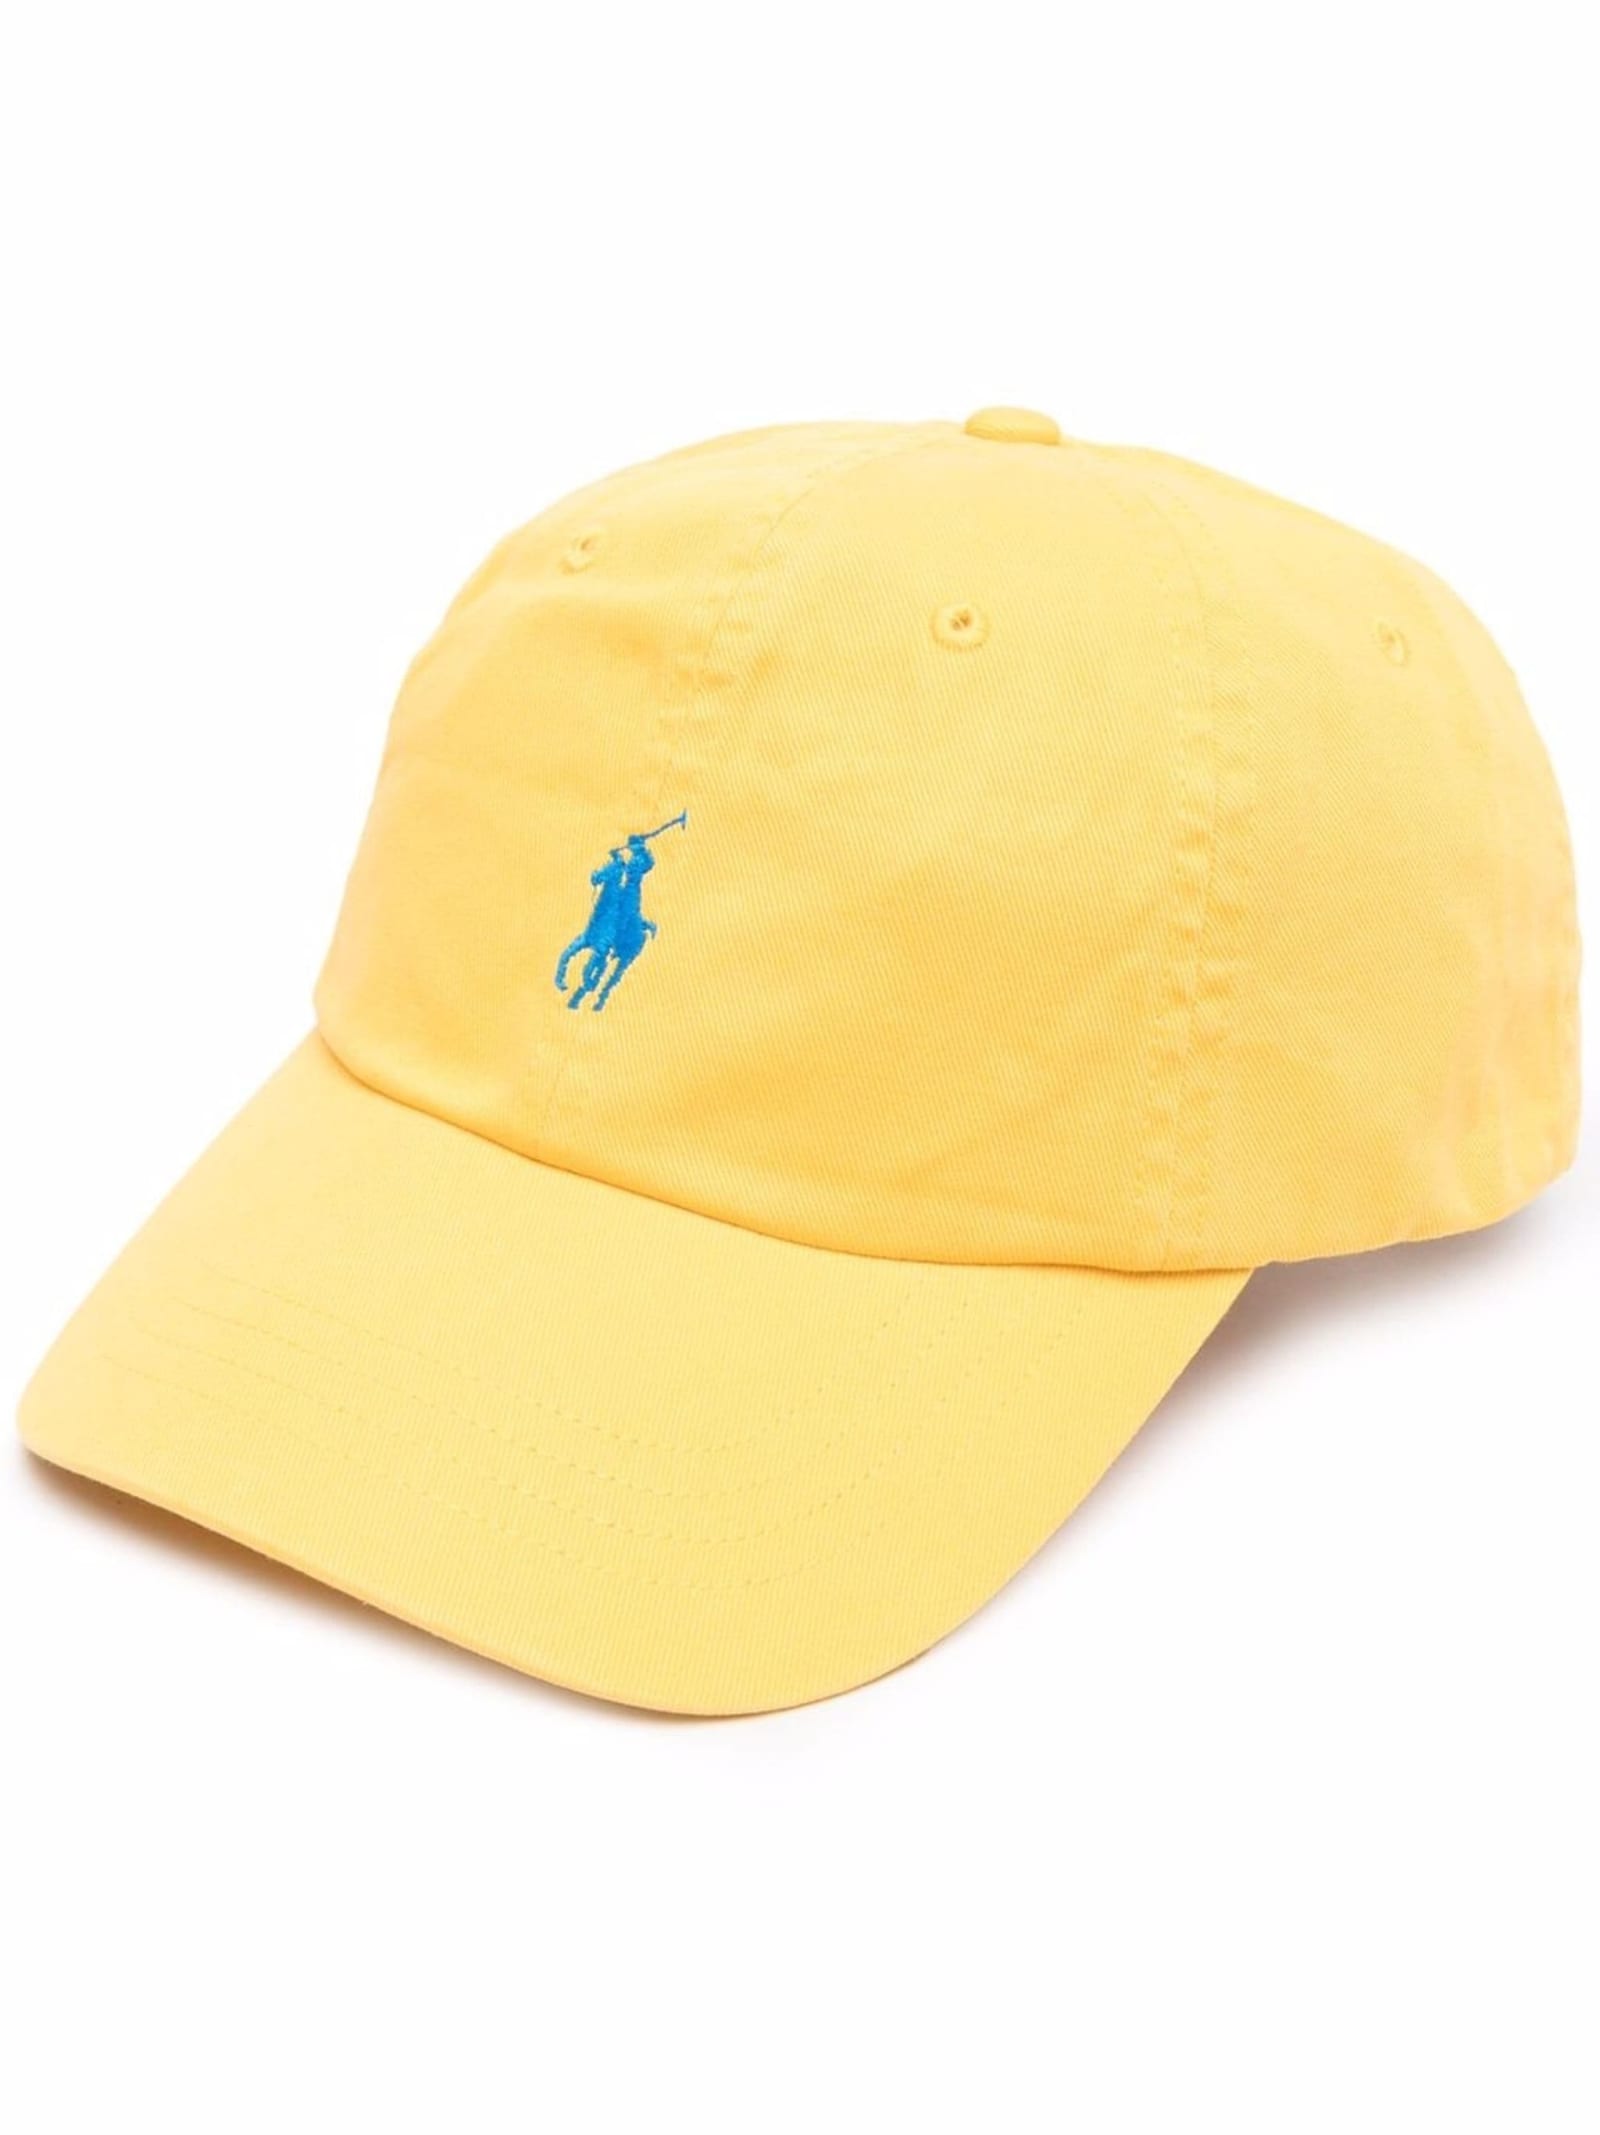 Ralph Lauren Yellow Baseball Hat With Contrasting Pony